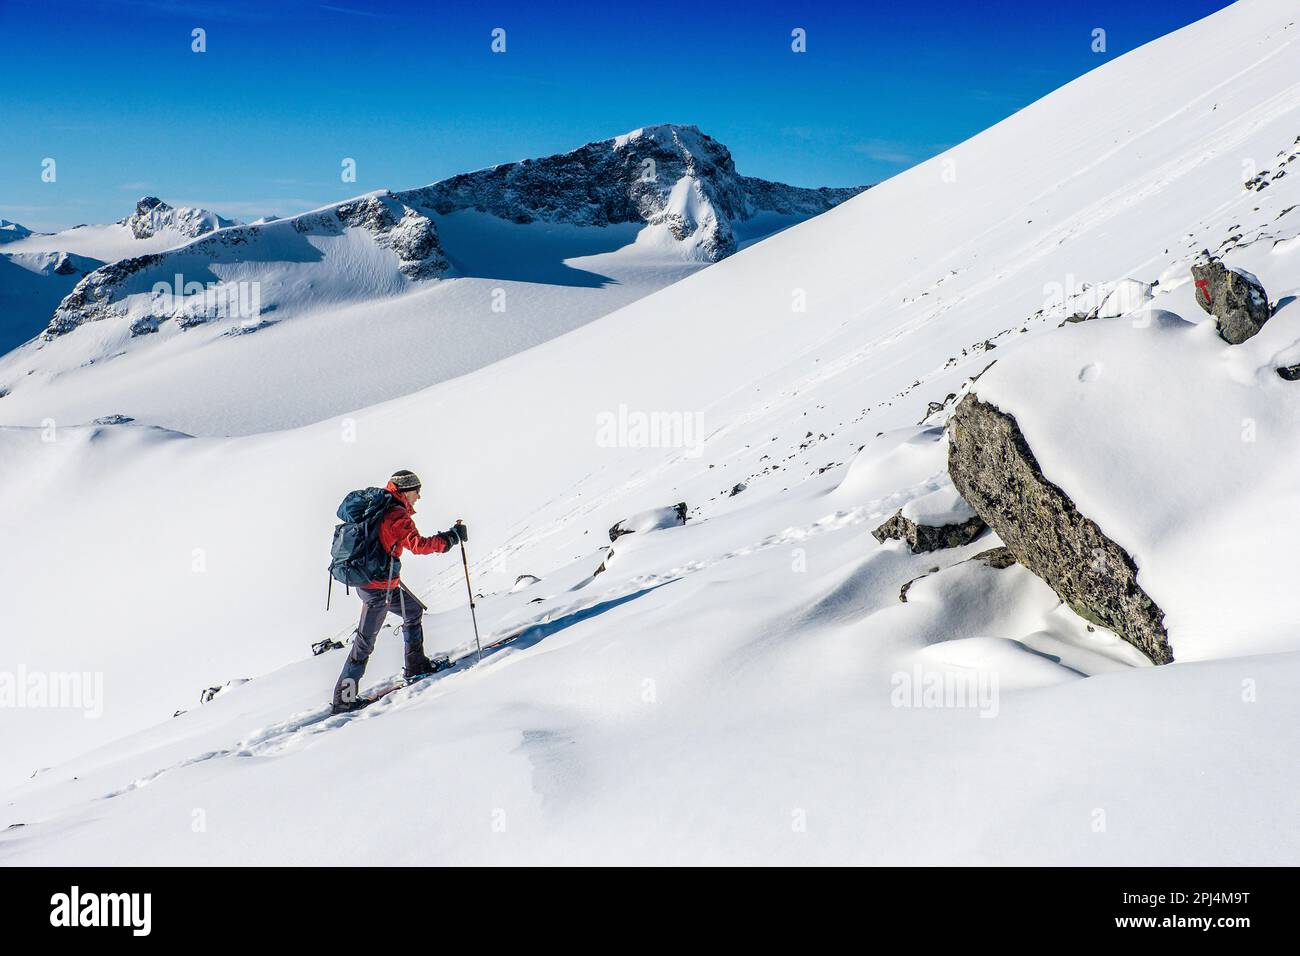 Backcountry skiing ( ski touring / nordic skiing ) in the Jotunheimen region of Norway Stock Photo